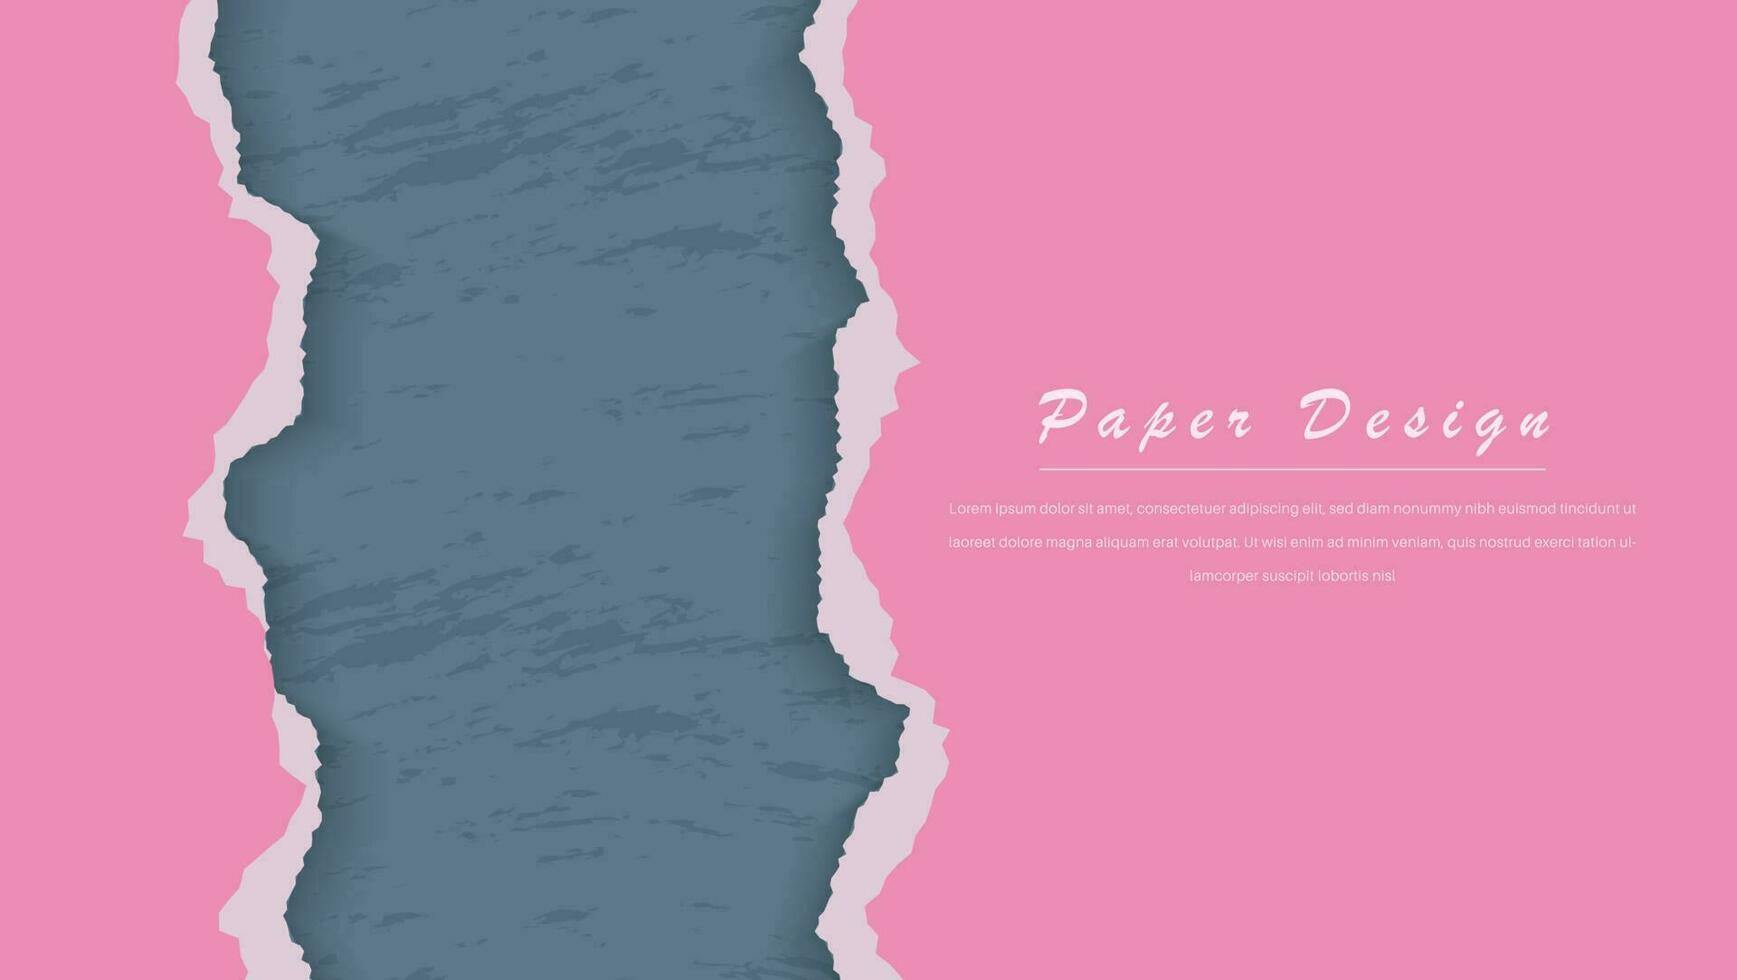 resumen Clásico rosado papel rasgado diseño modelo vector